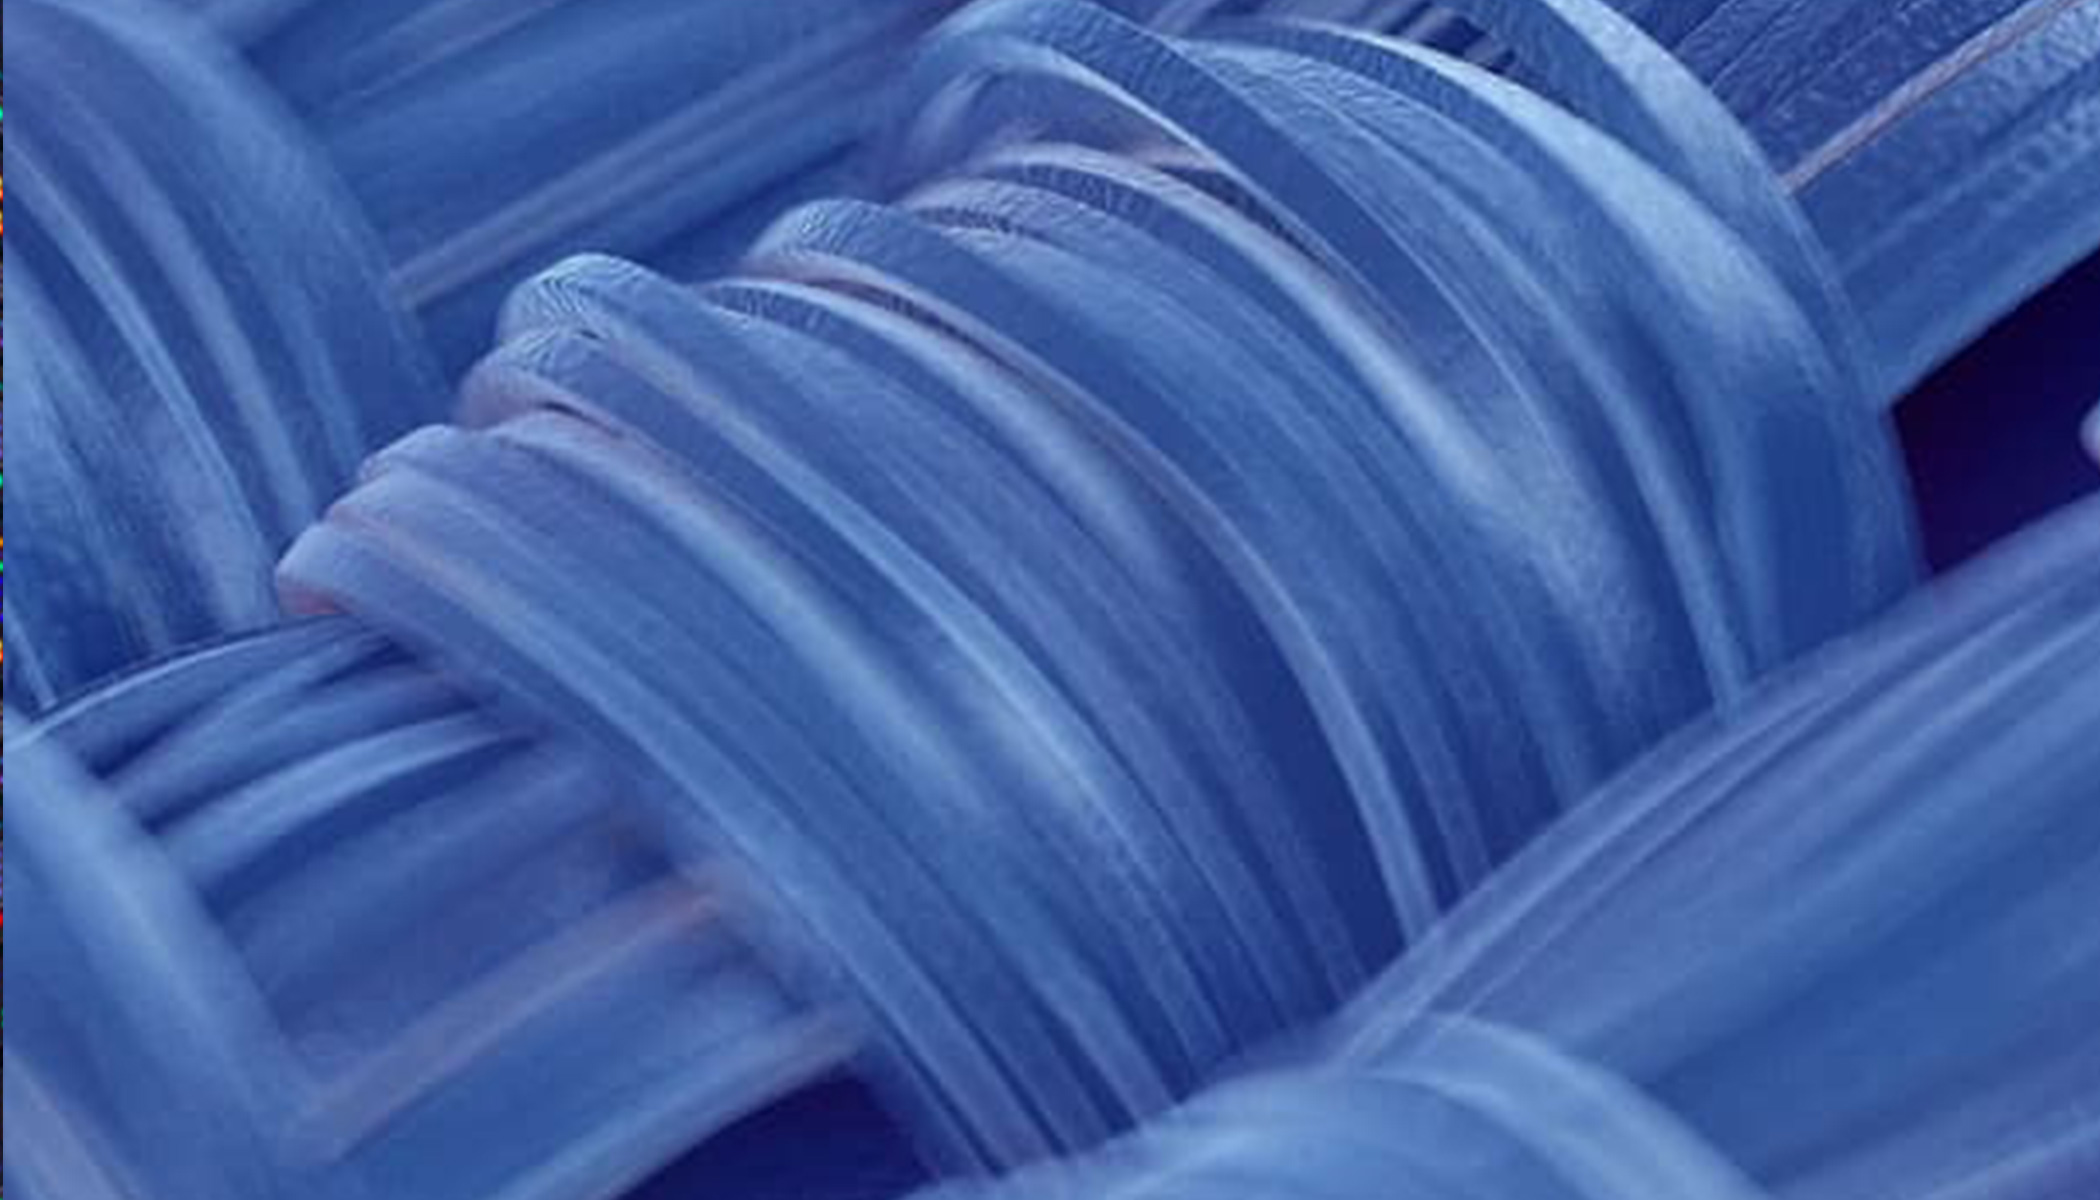 A close-up of blue woven fibers